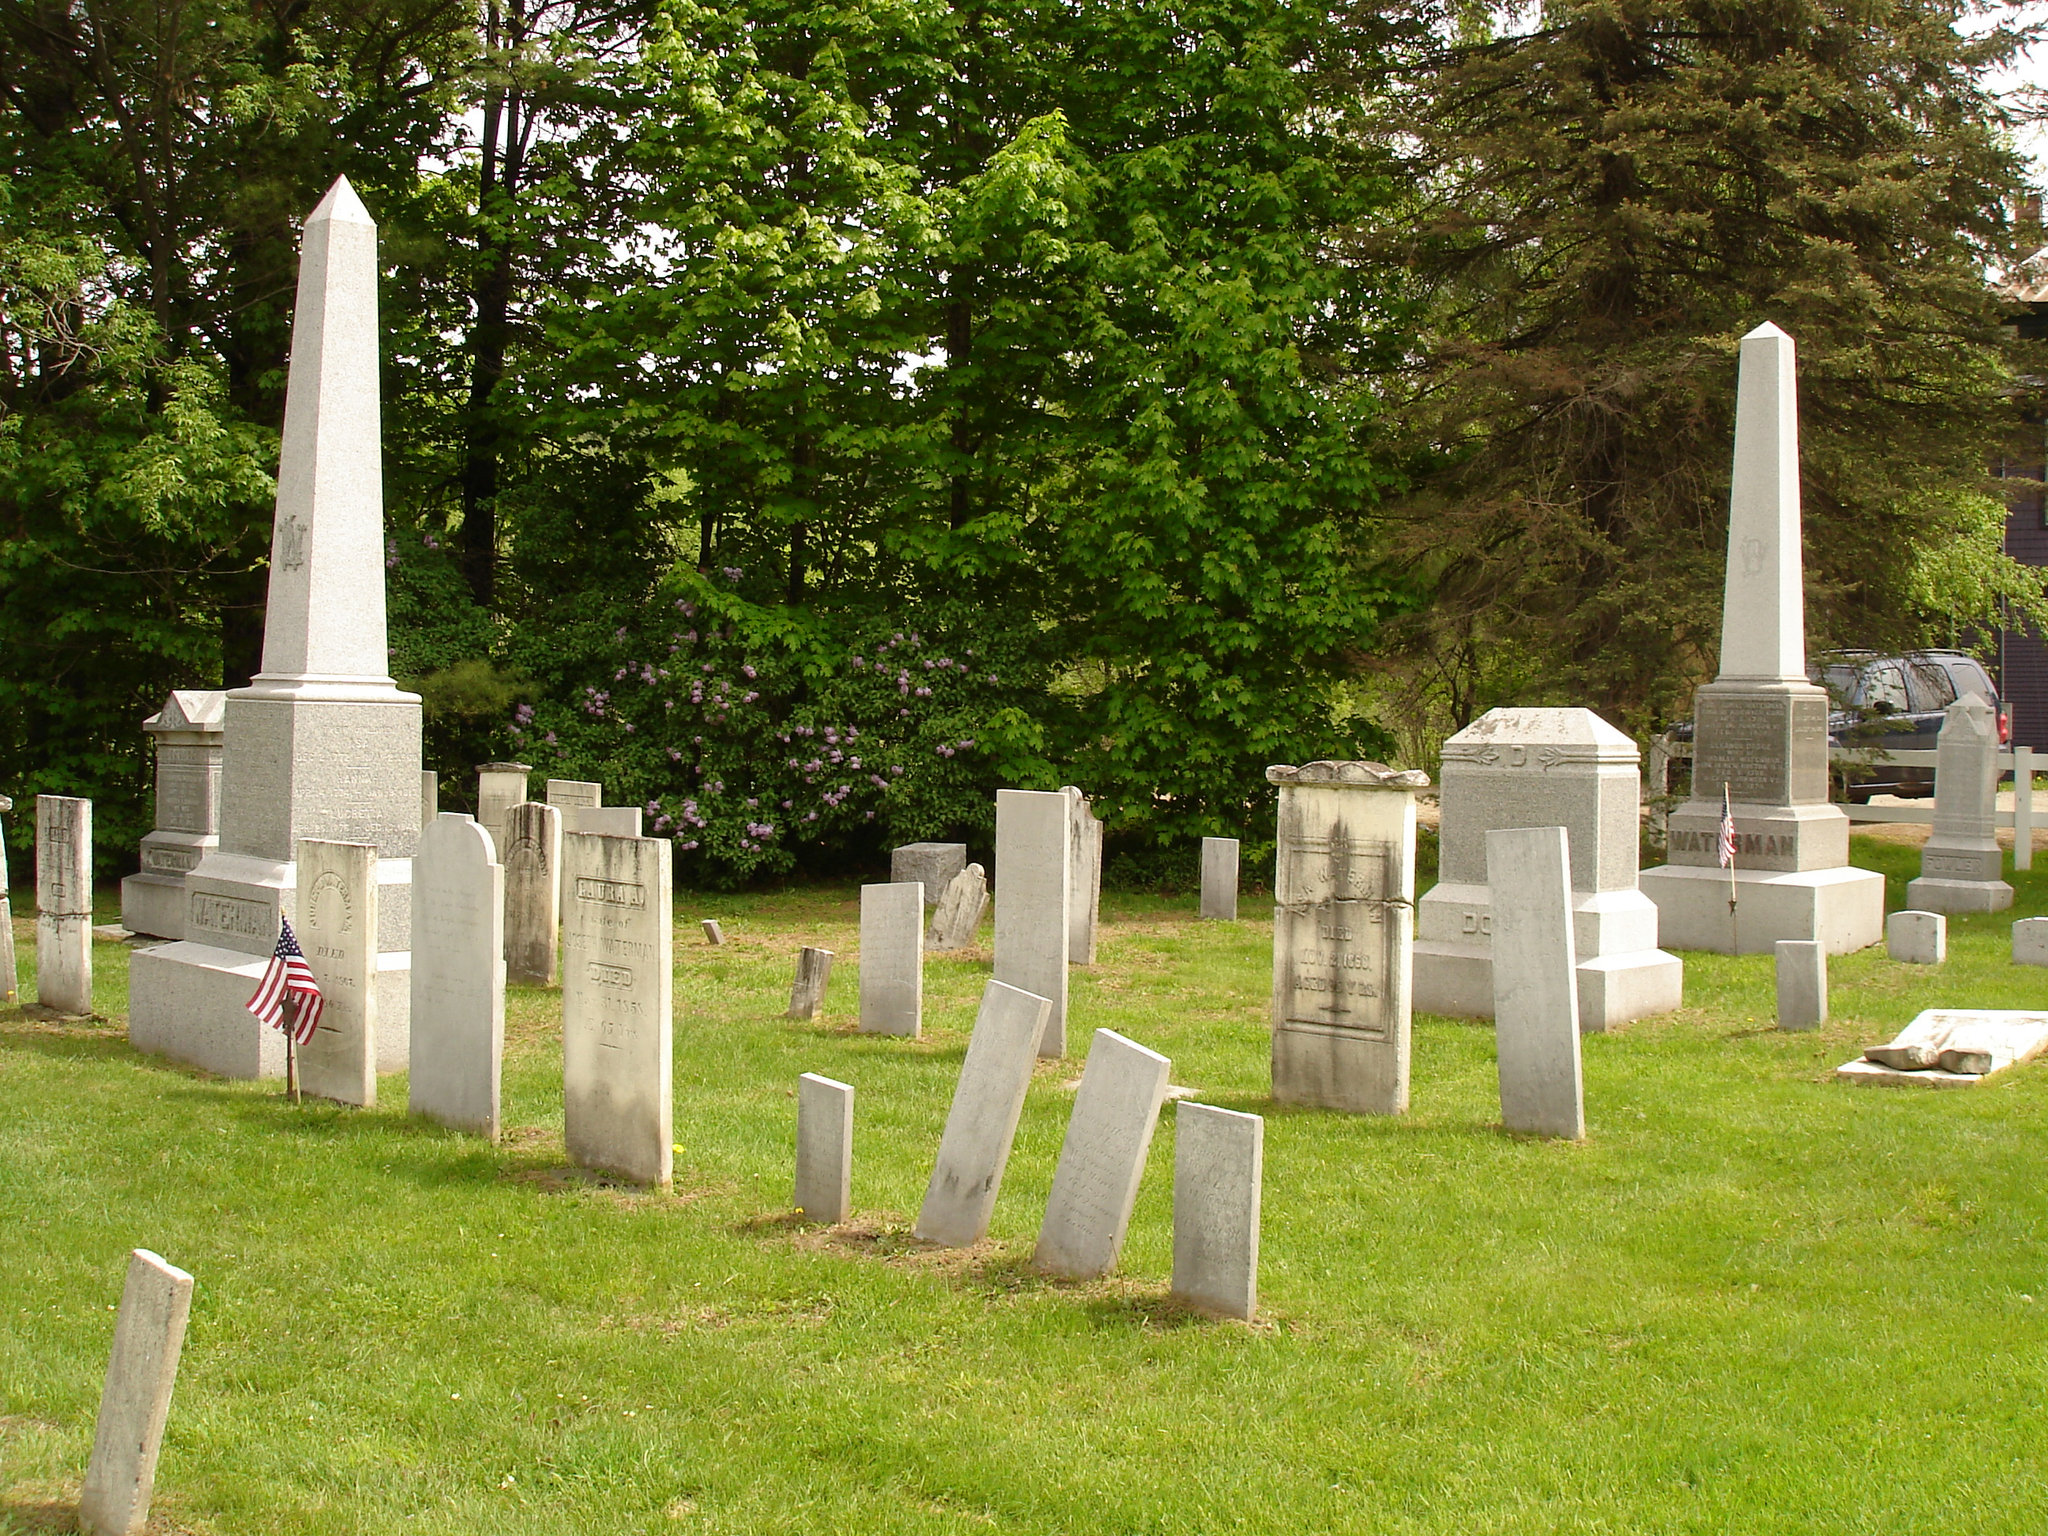 Cimetière de Johnson / Johnson's cemetery.  Vermont.  USA.  23 mai 2009